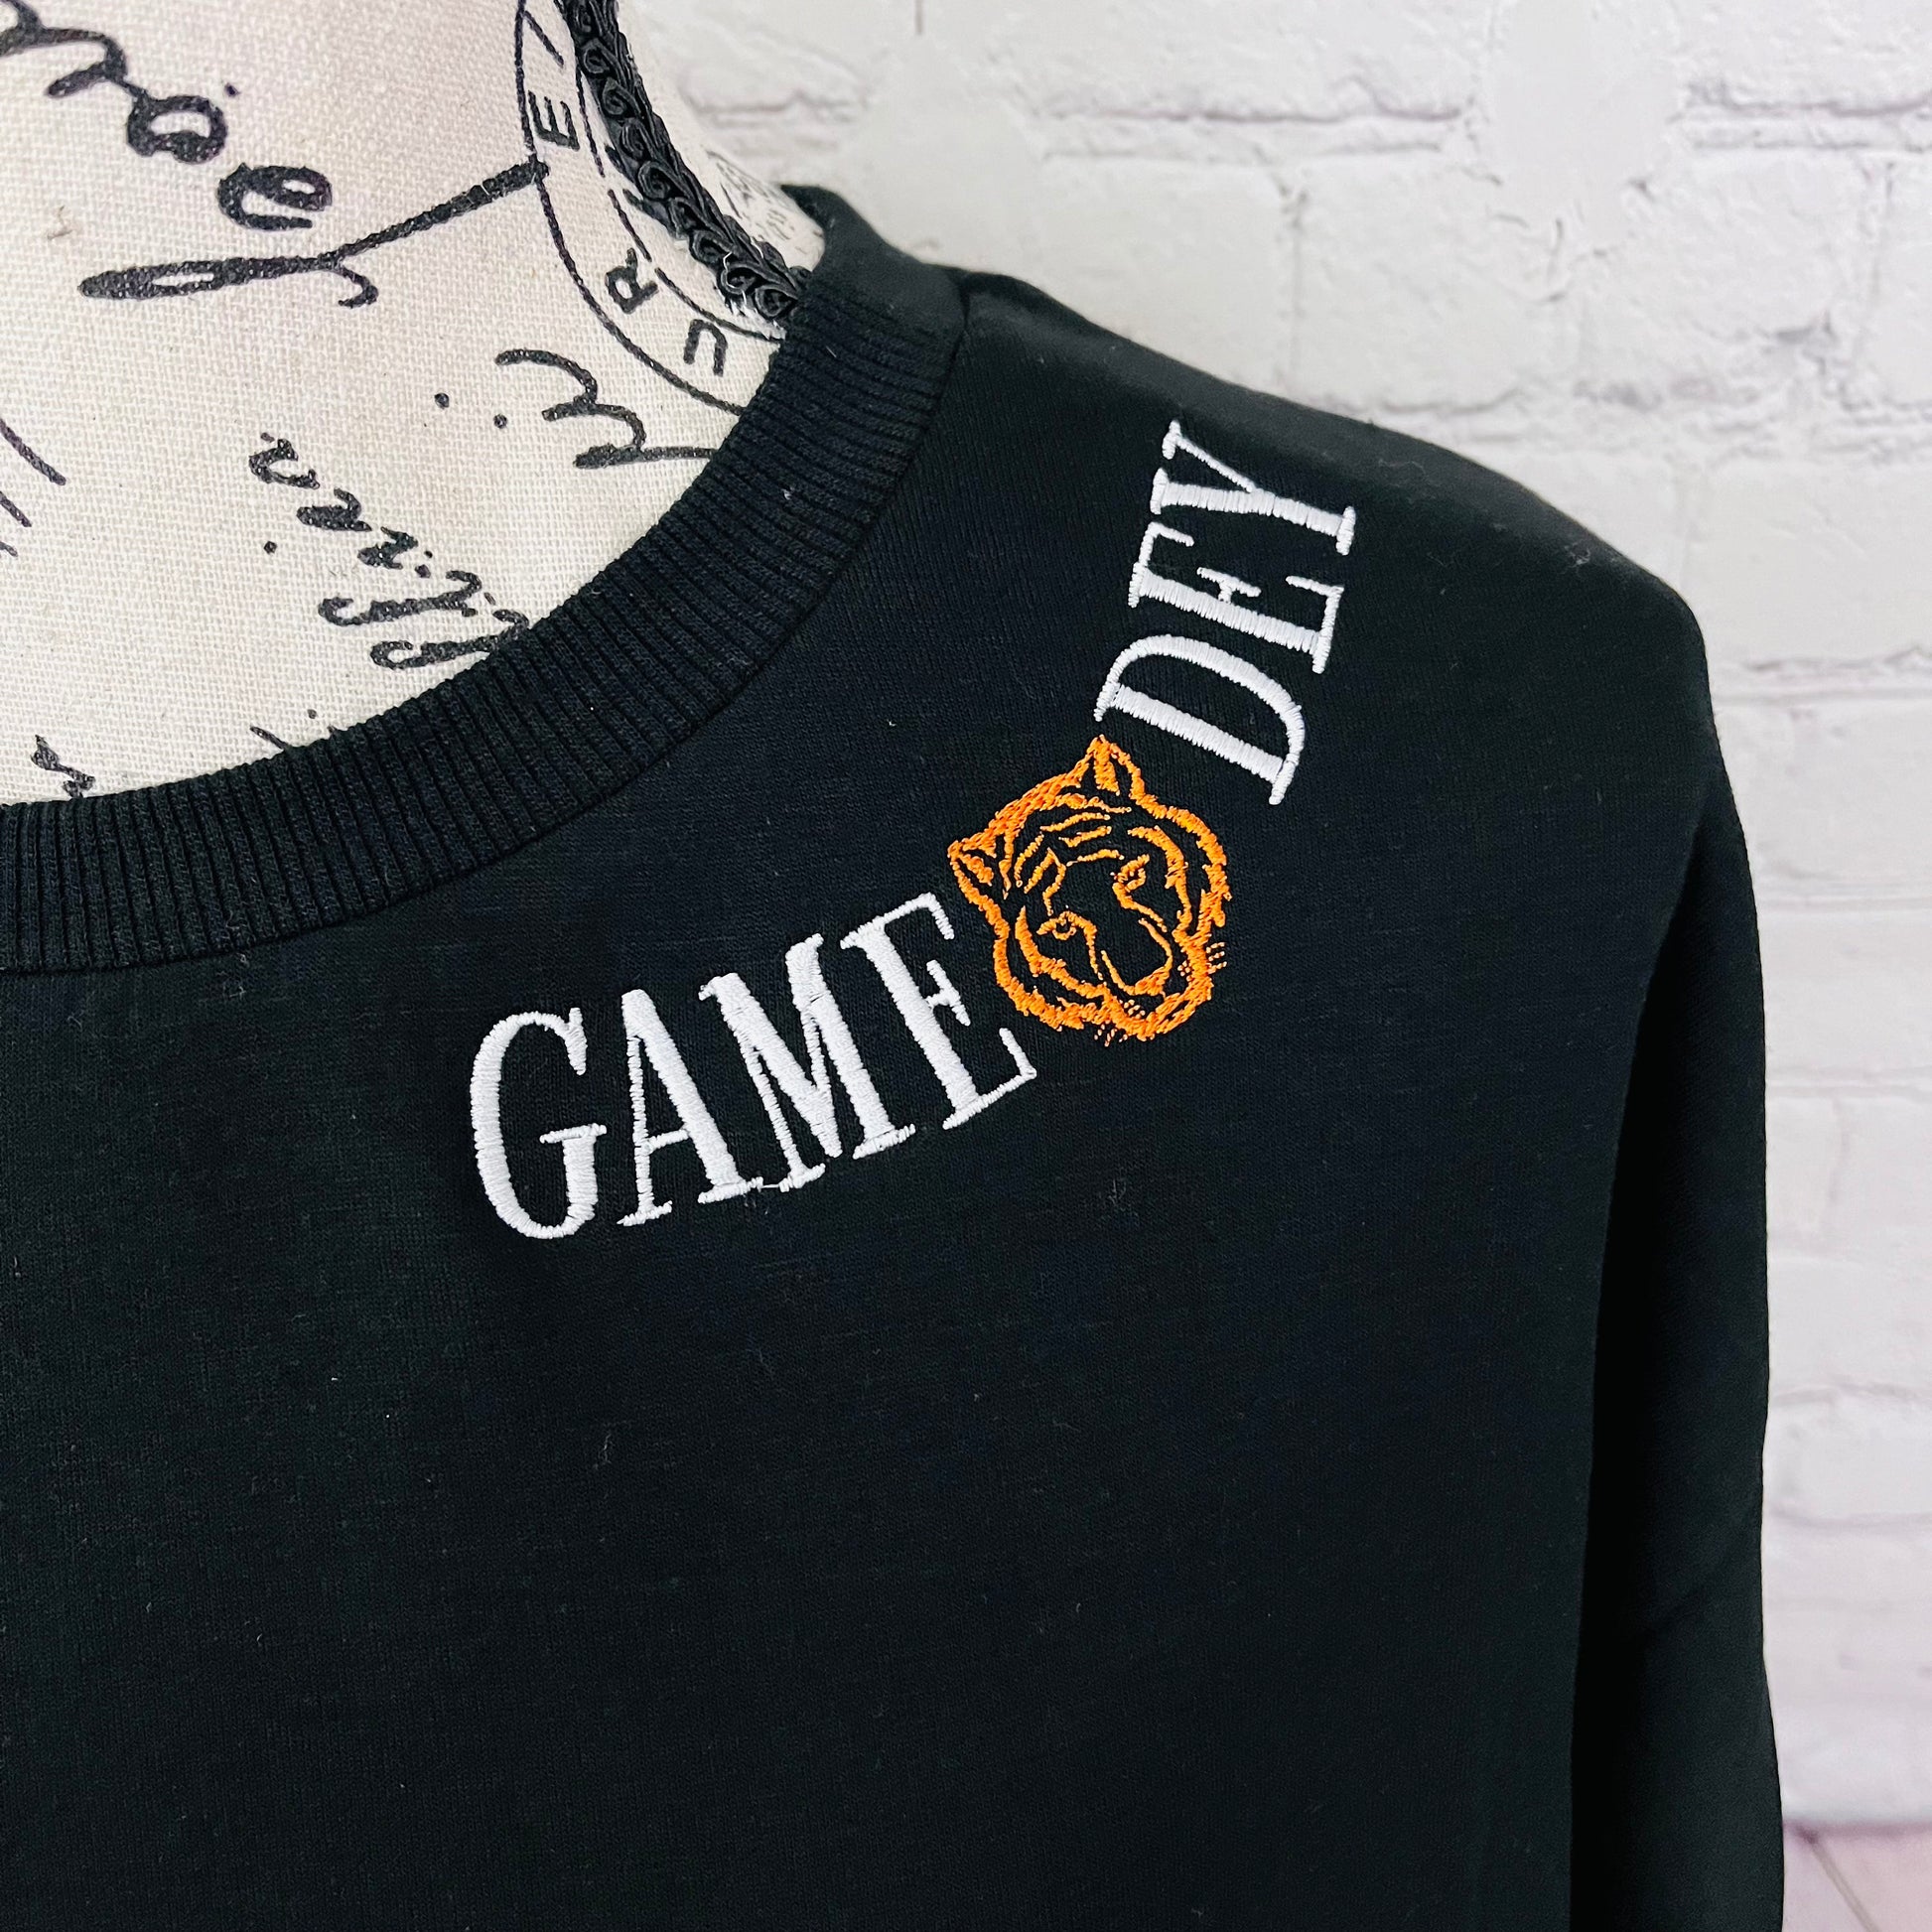 Monogrammed Game Day Sweatshirt – rsmonogramcompany